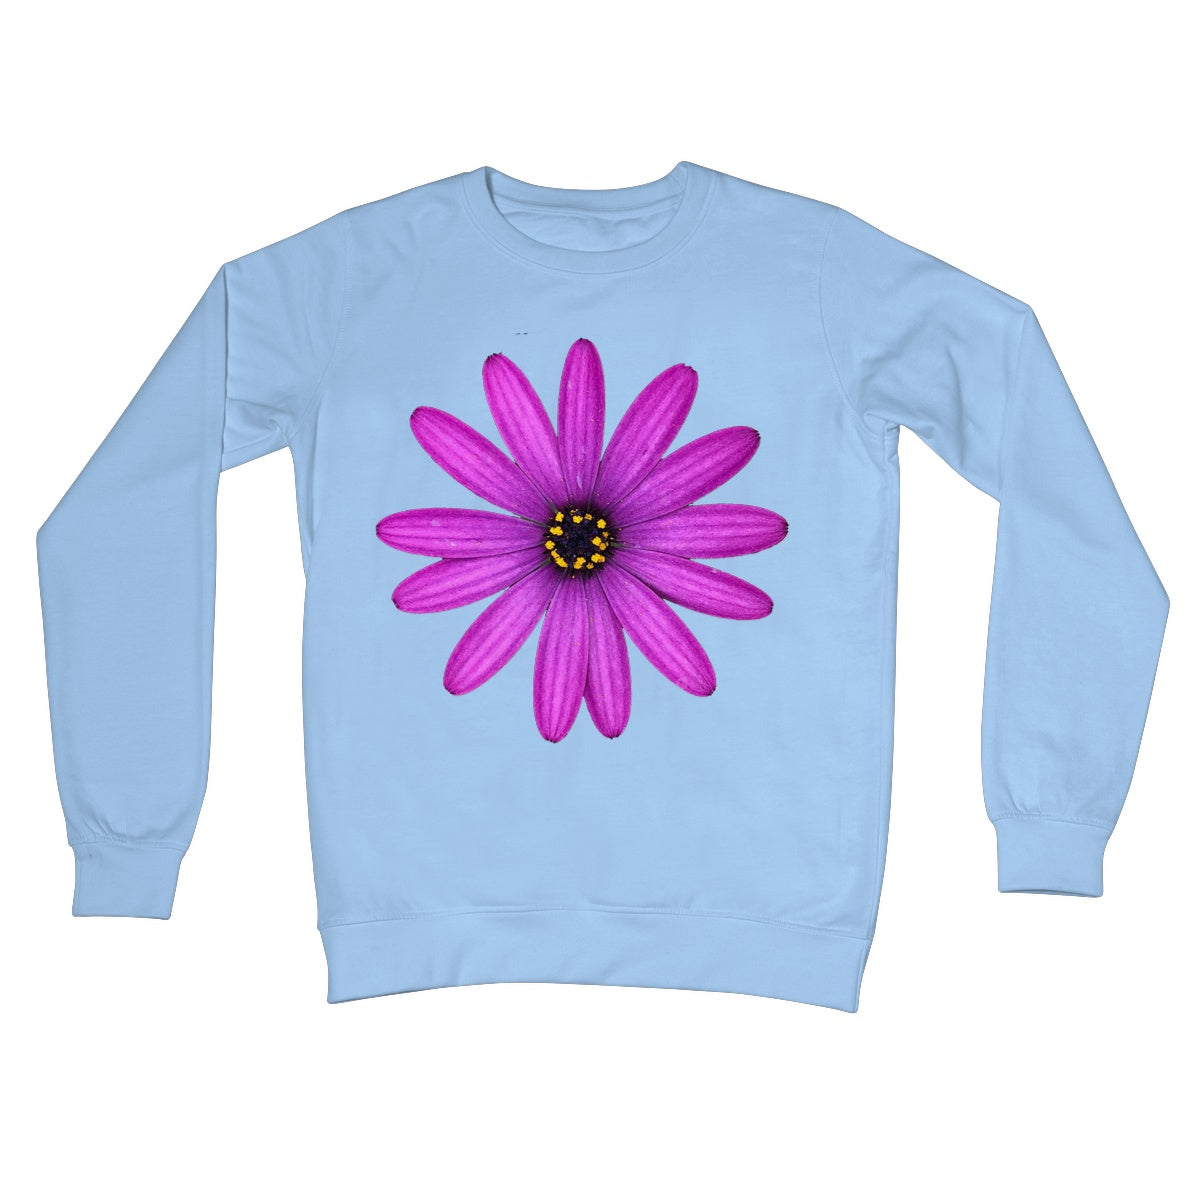 Pink Flower 'Osteospermum Tresco Purple' Crew Neck Sweatshirt